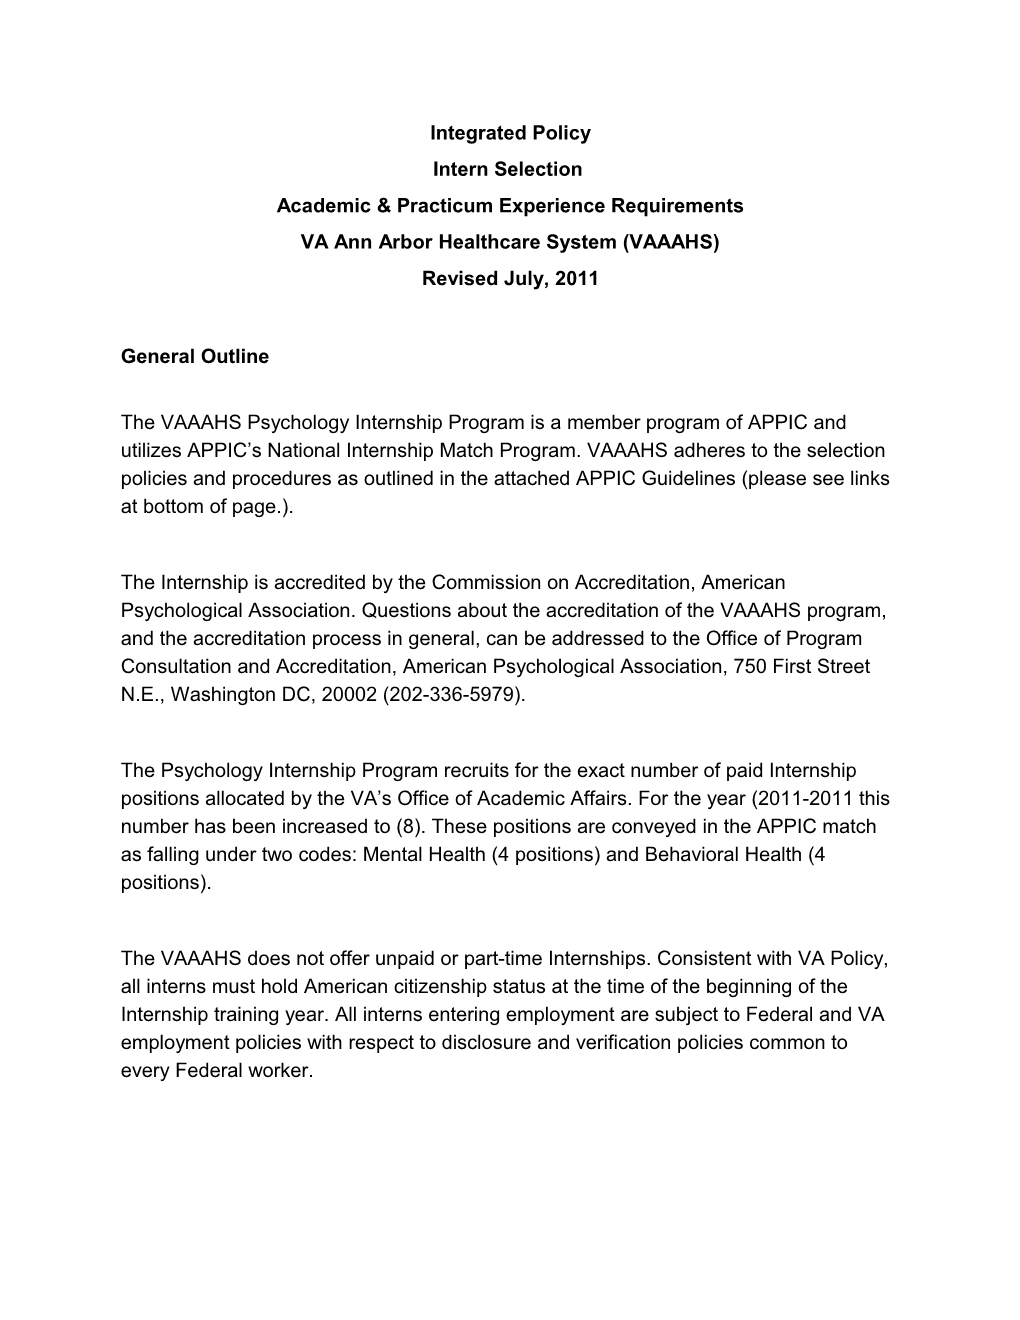 Academic & Practicum Experience Requirements